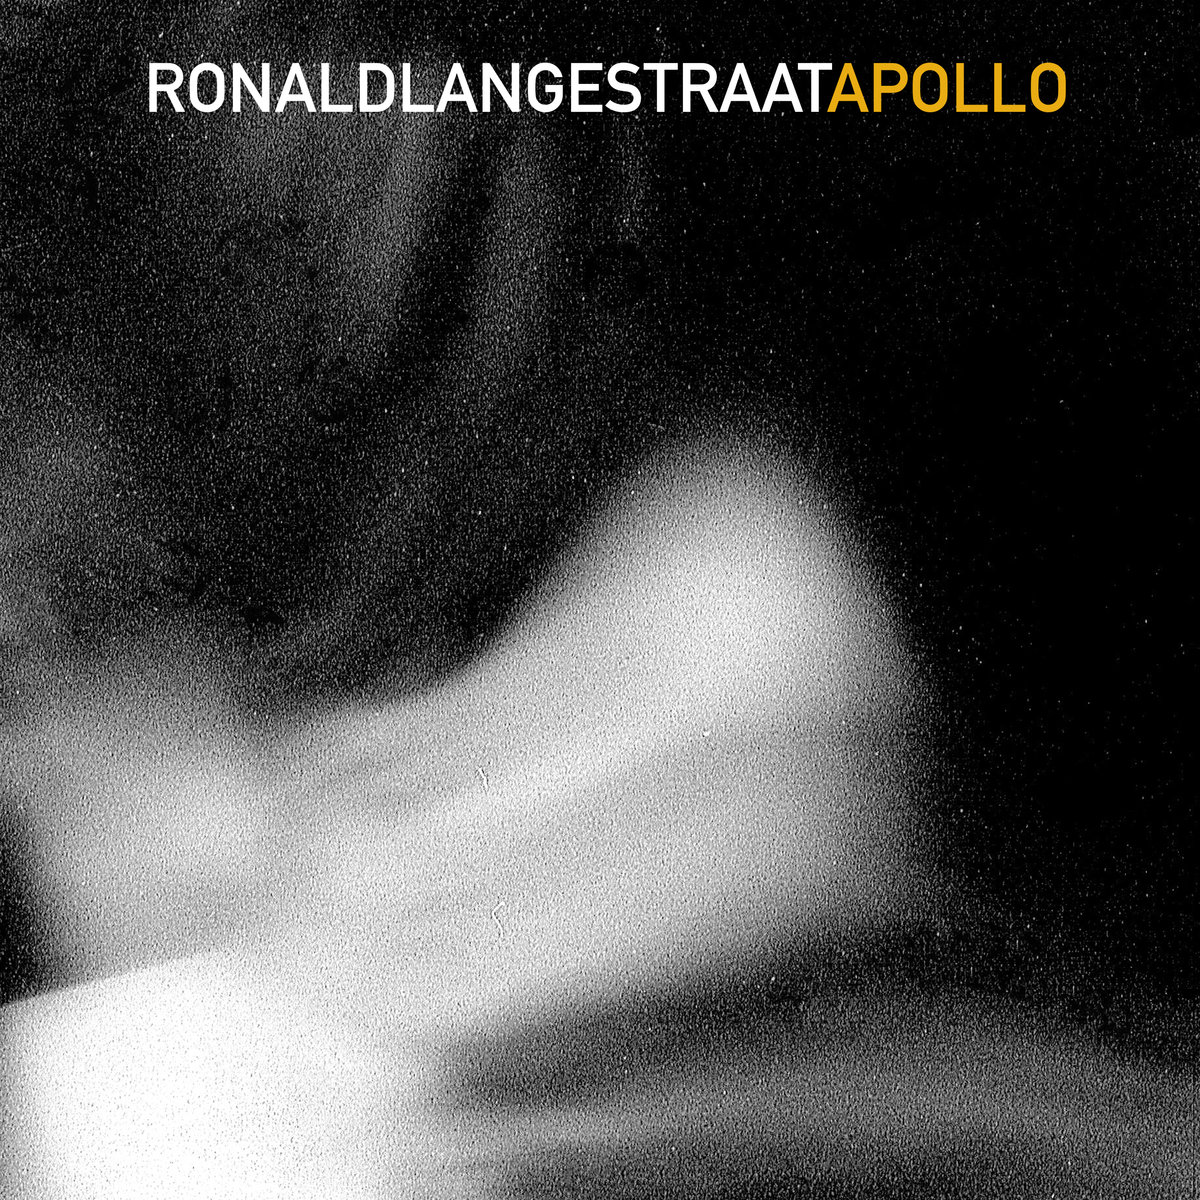 Ronald Langestraat - Apollo - SONLP-002 - SOUTH OF NORTH